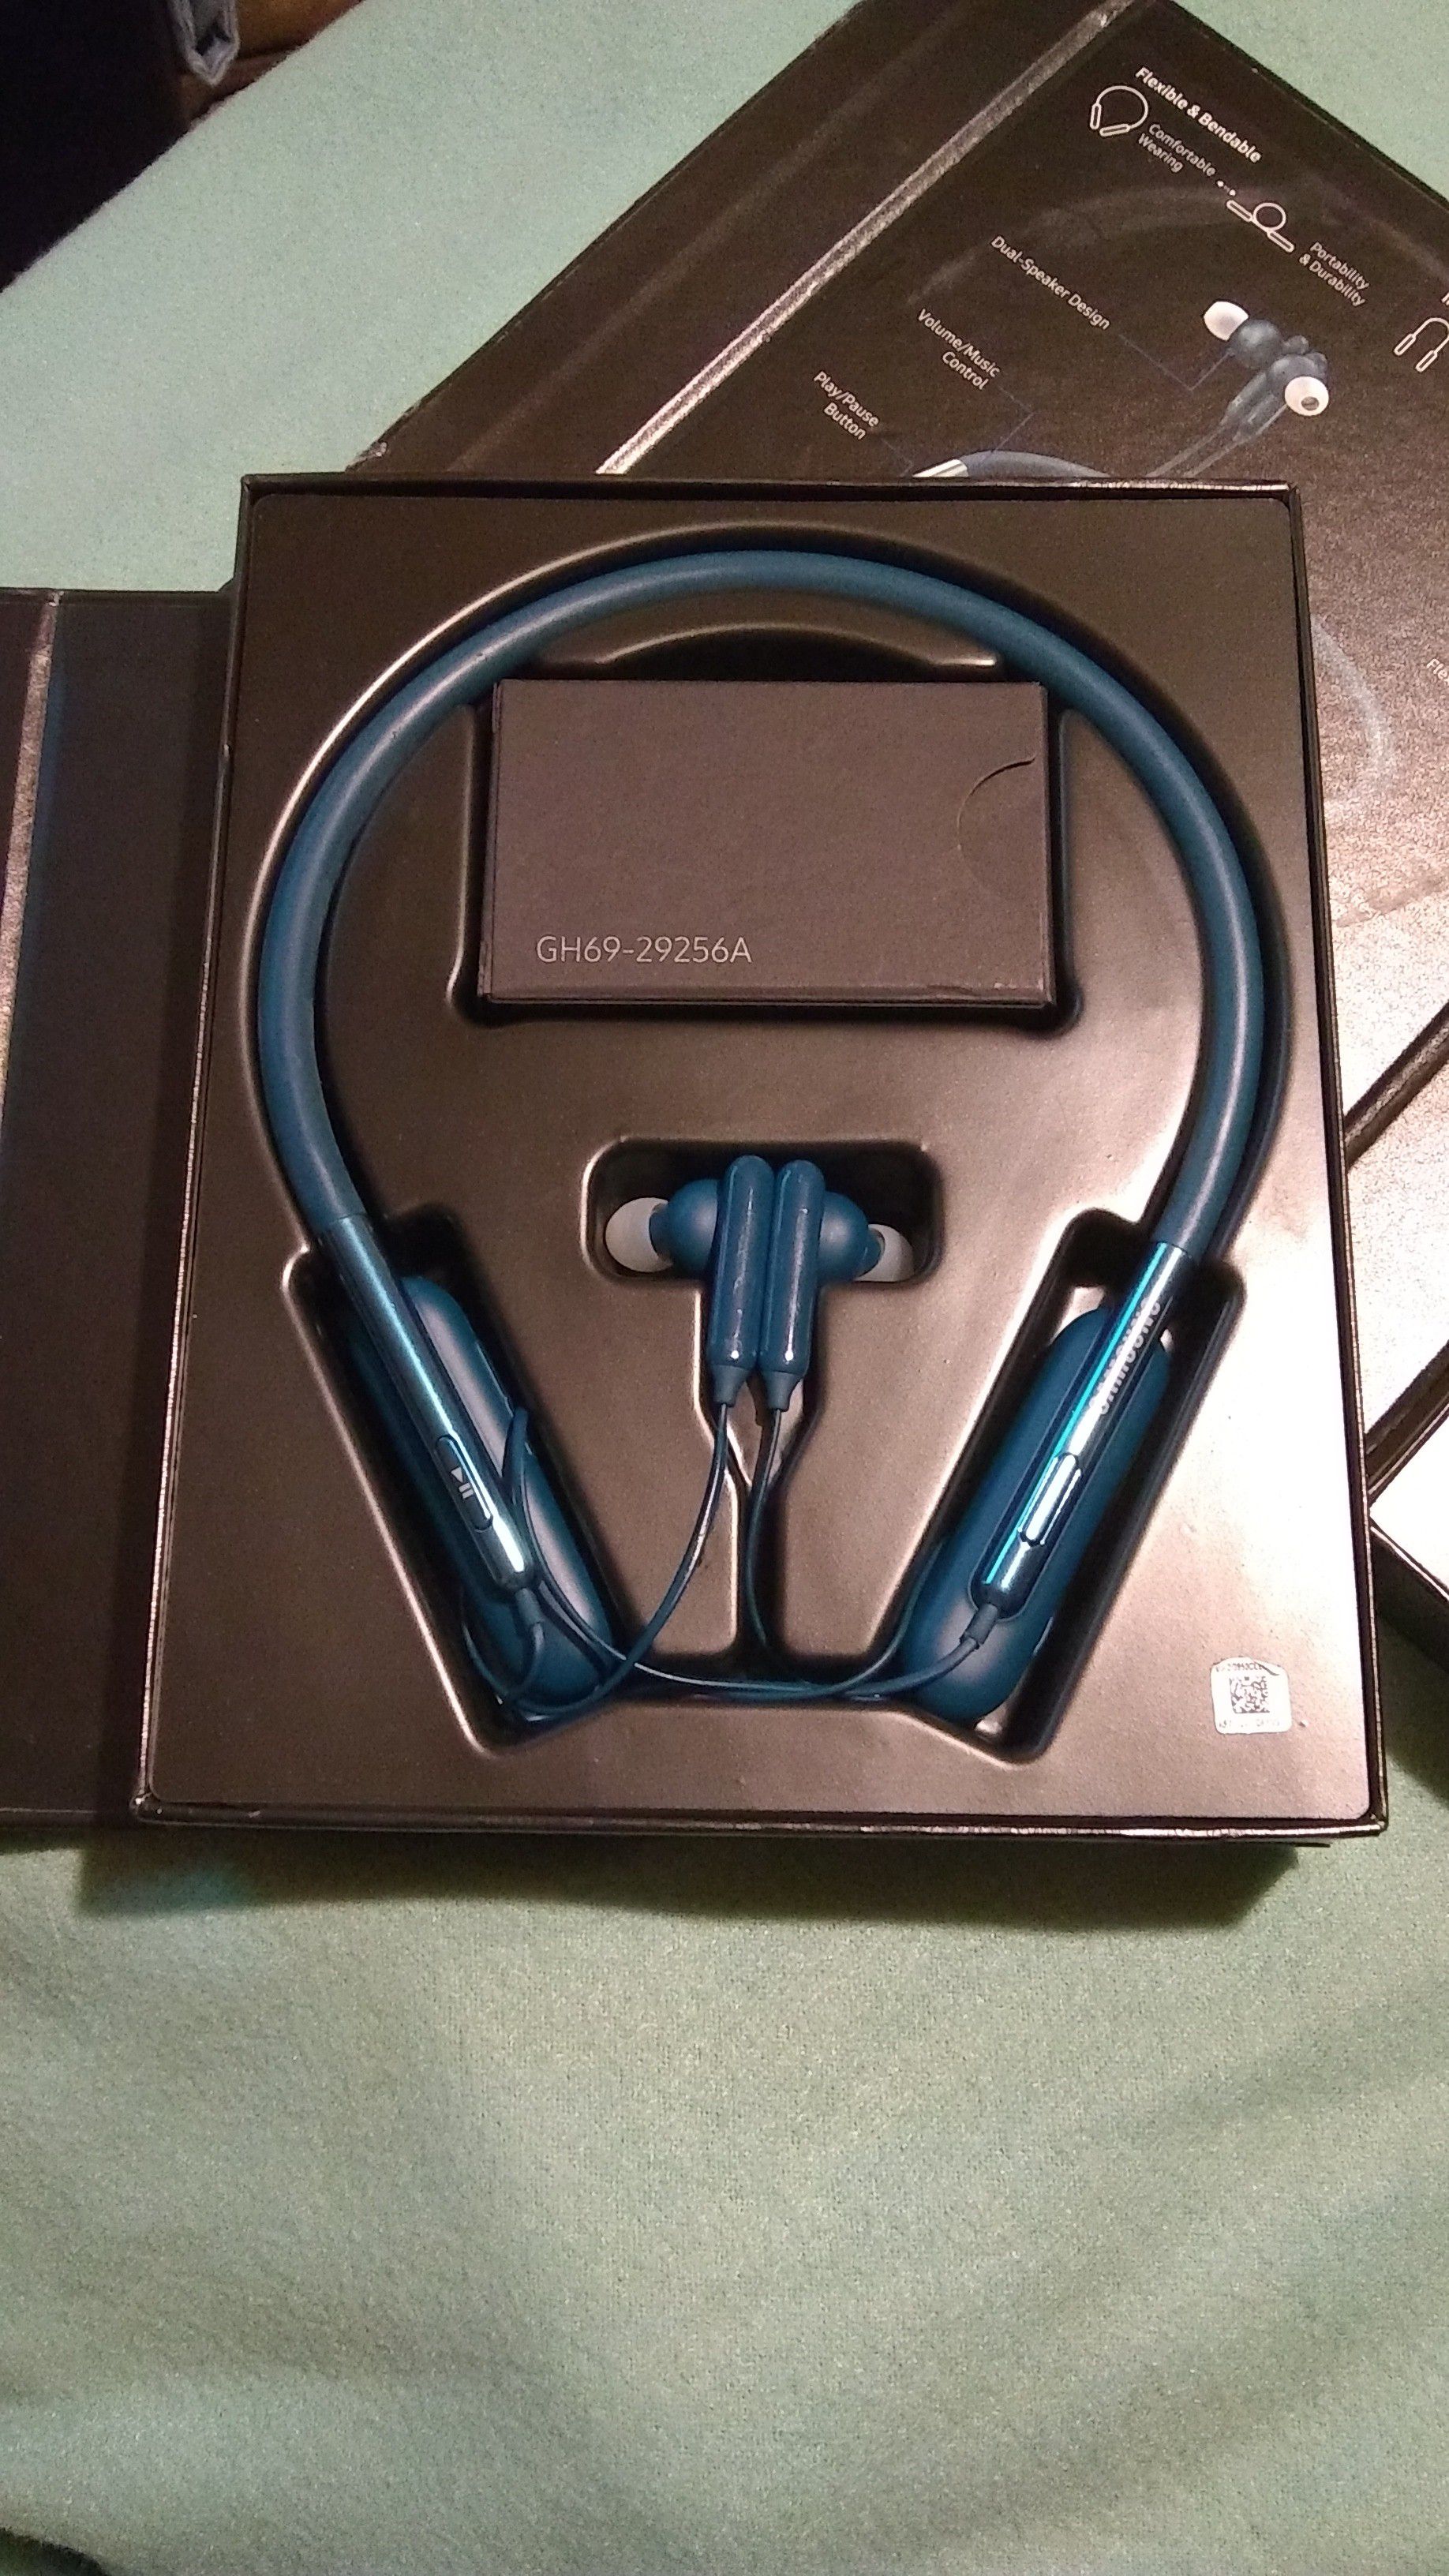 Samsung Uflex Bluetooth headphones $40